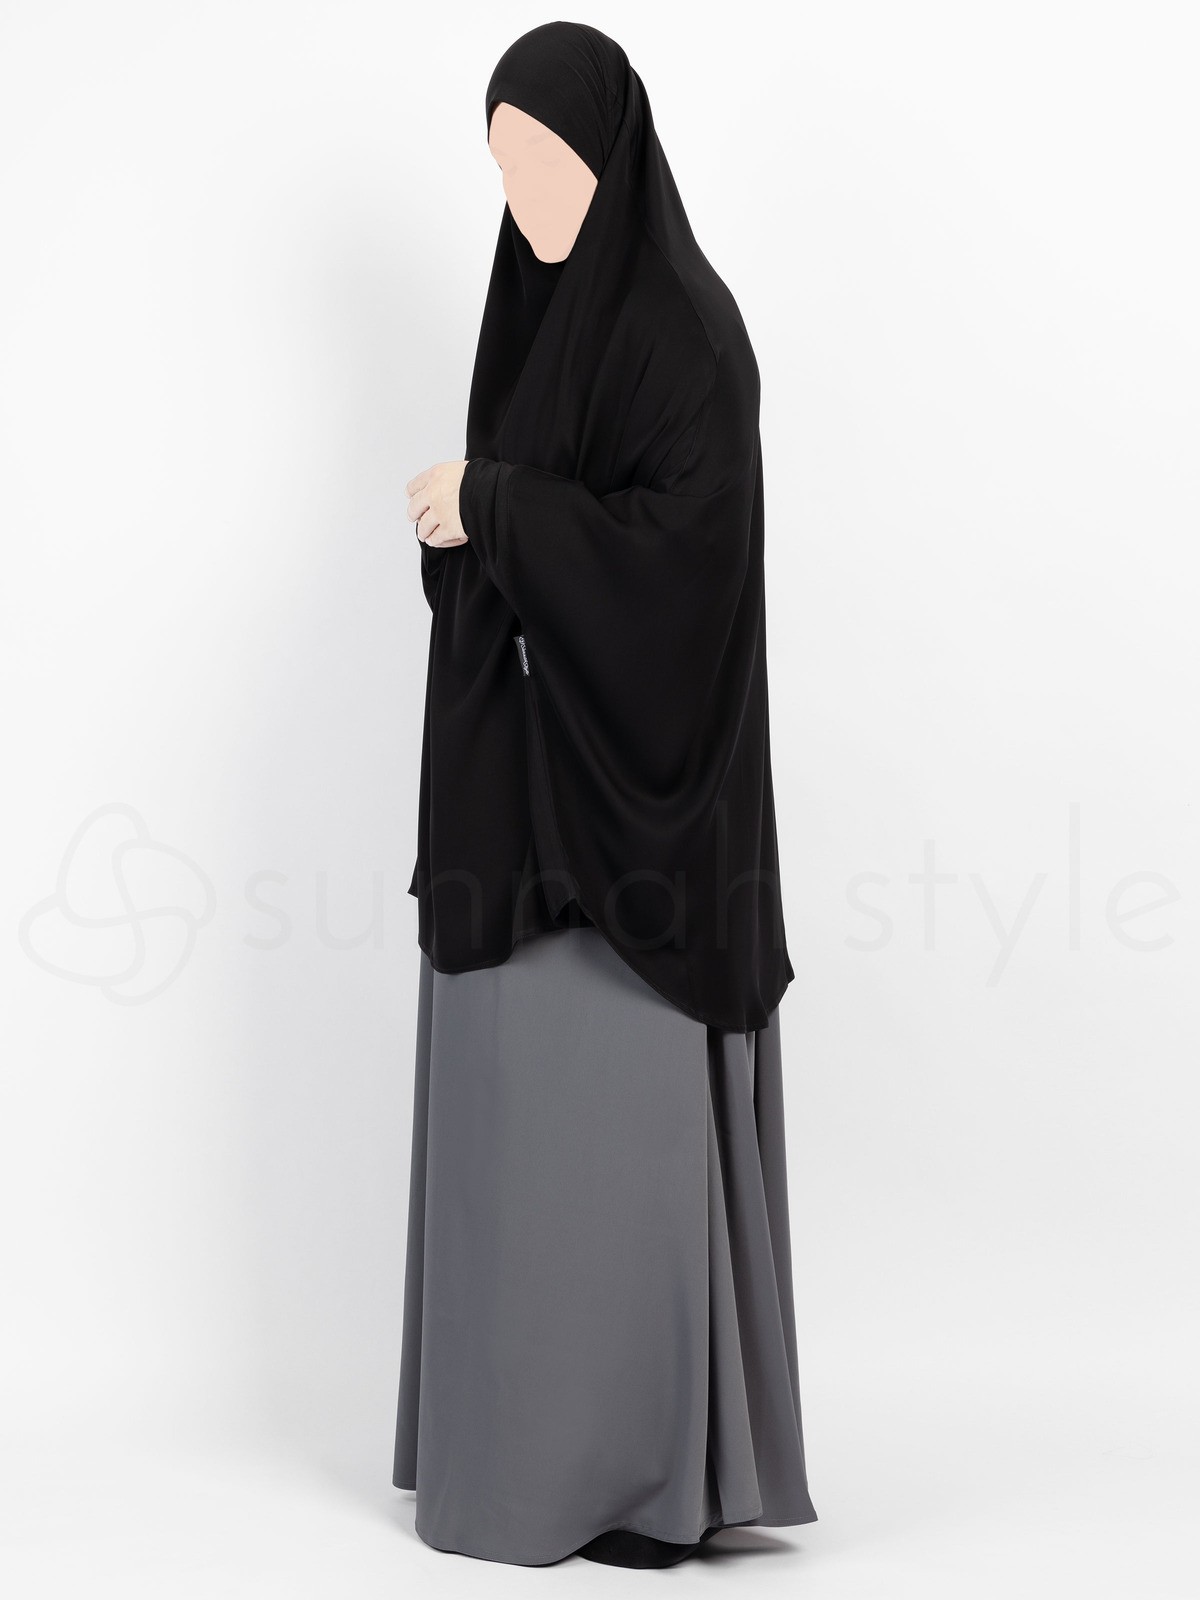 Sunnah Style - Signature Jilbab Top - Thigh Length (Black)